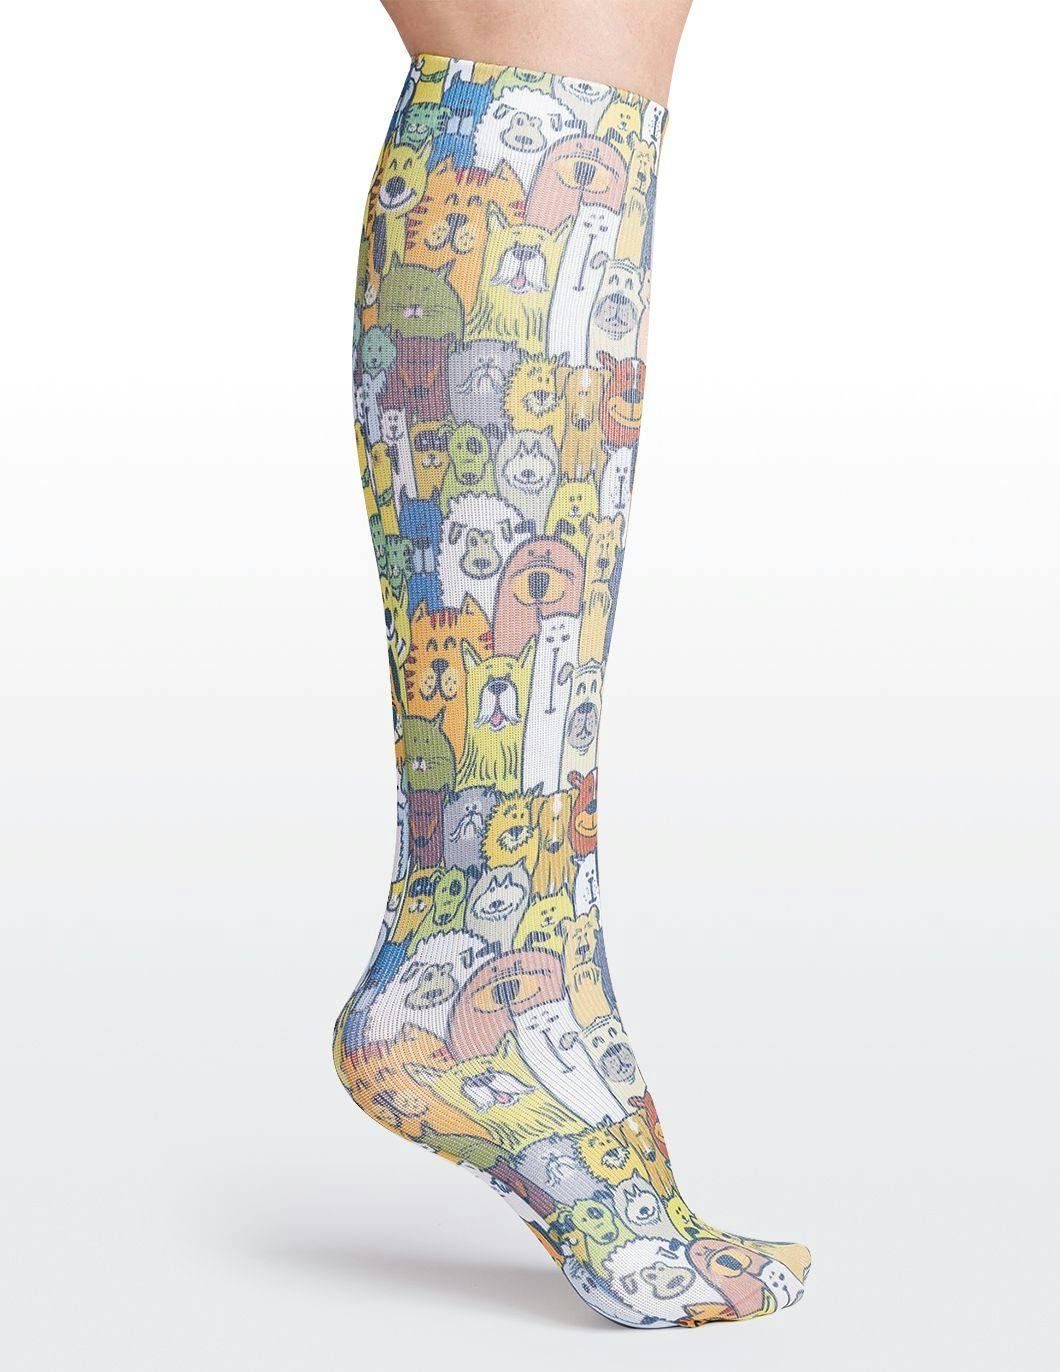 cutieful-compression-socks-dapper-dogs-print-alt